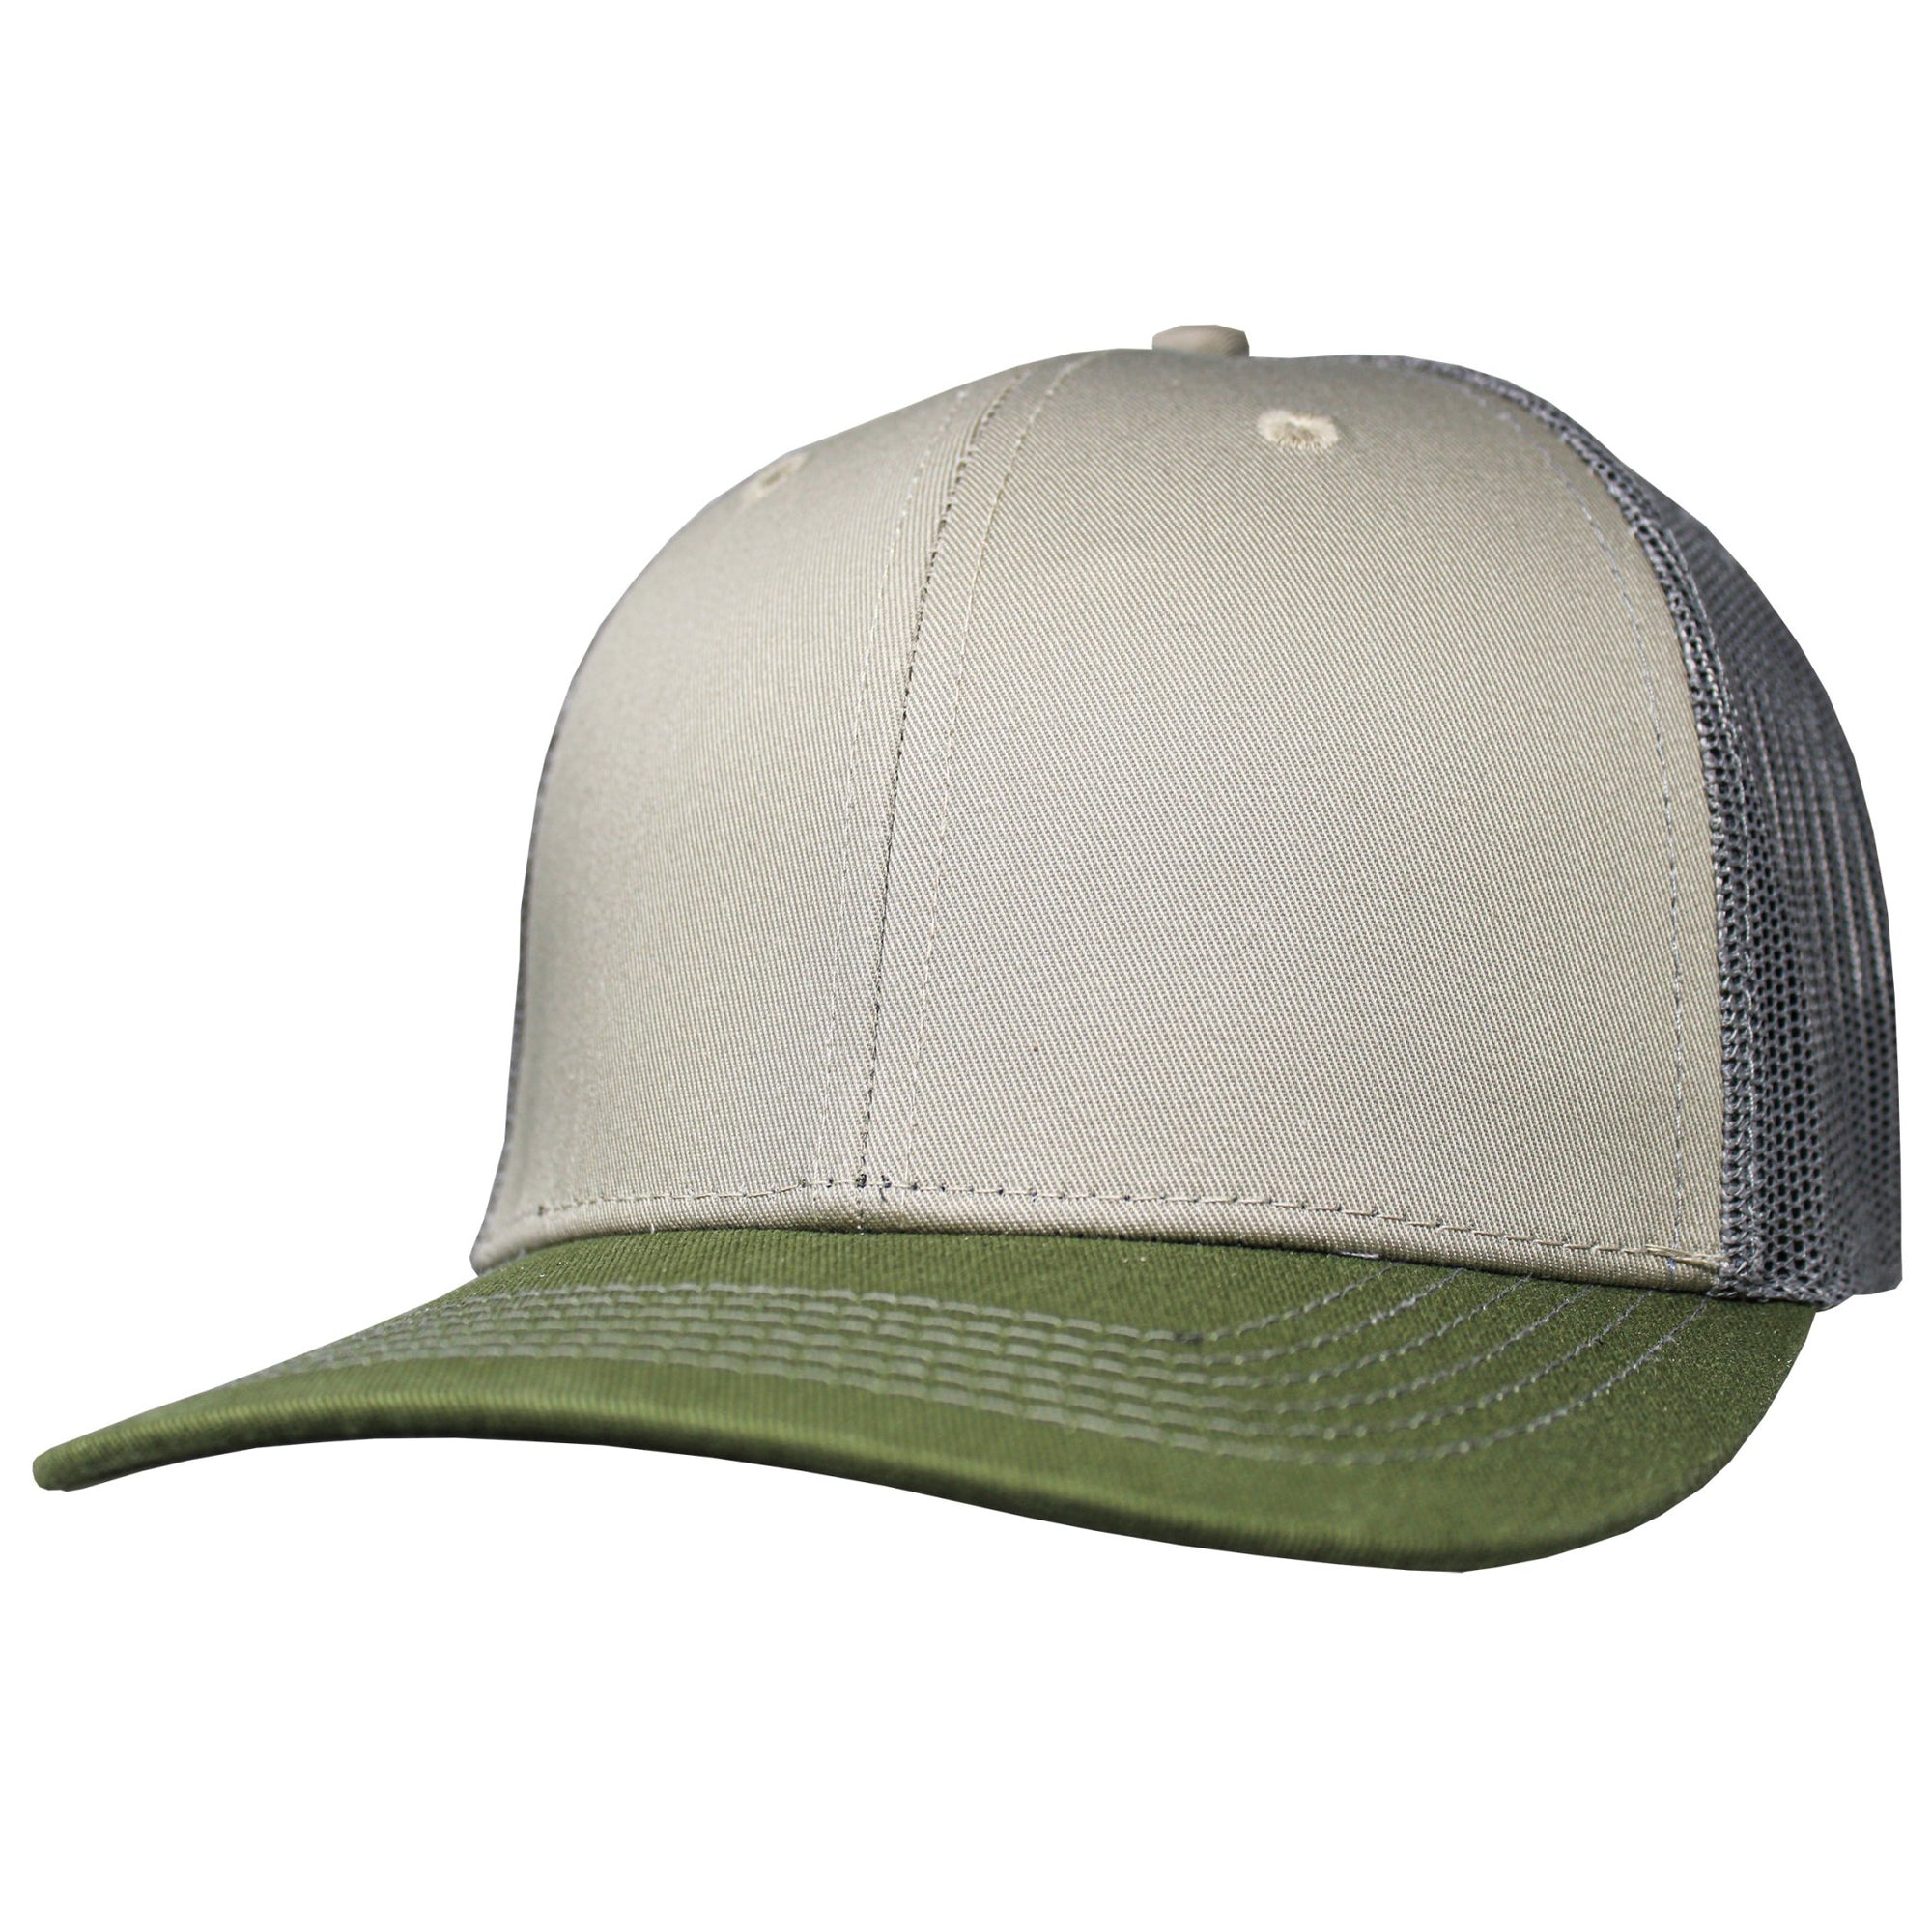 Blank Headwear - BC23 / 6 Panel Performance Trucker Cap - Khaki / Gray / MOD - Black Cat MFG - Hat